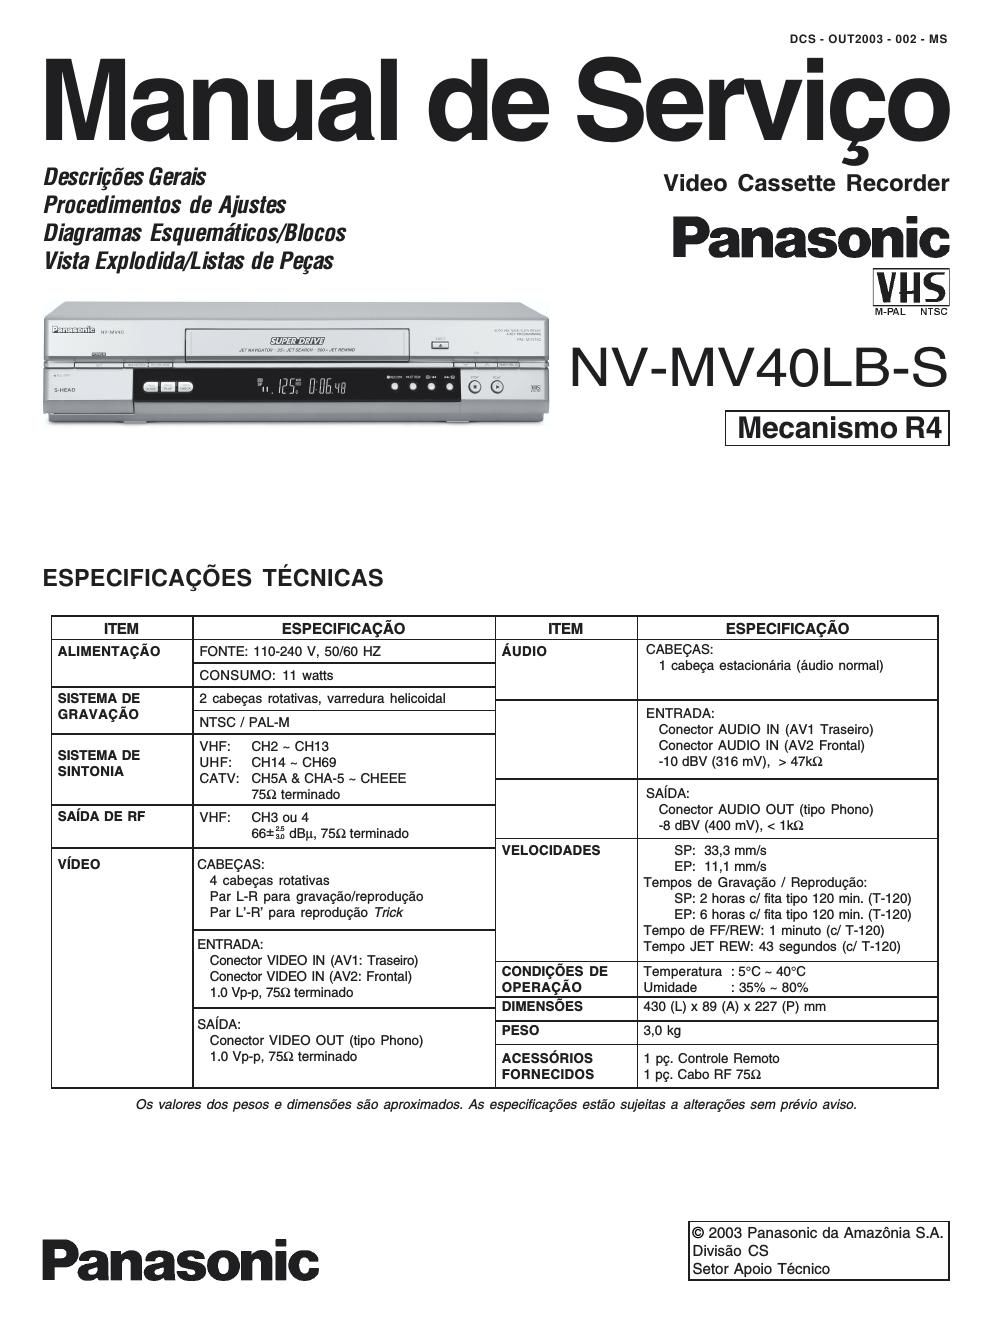 panasonic nv mv 40 lbs service manual